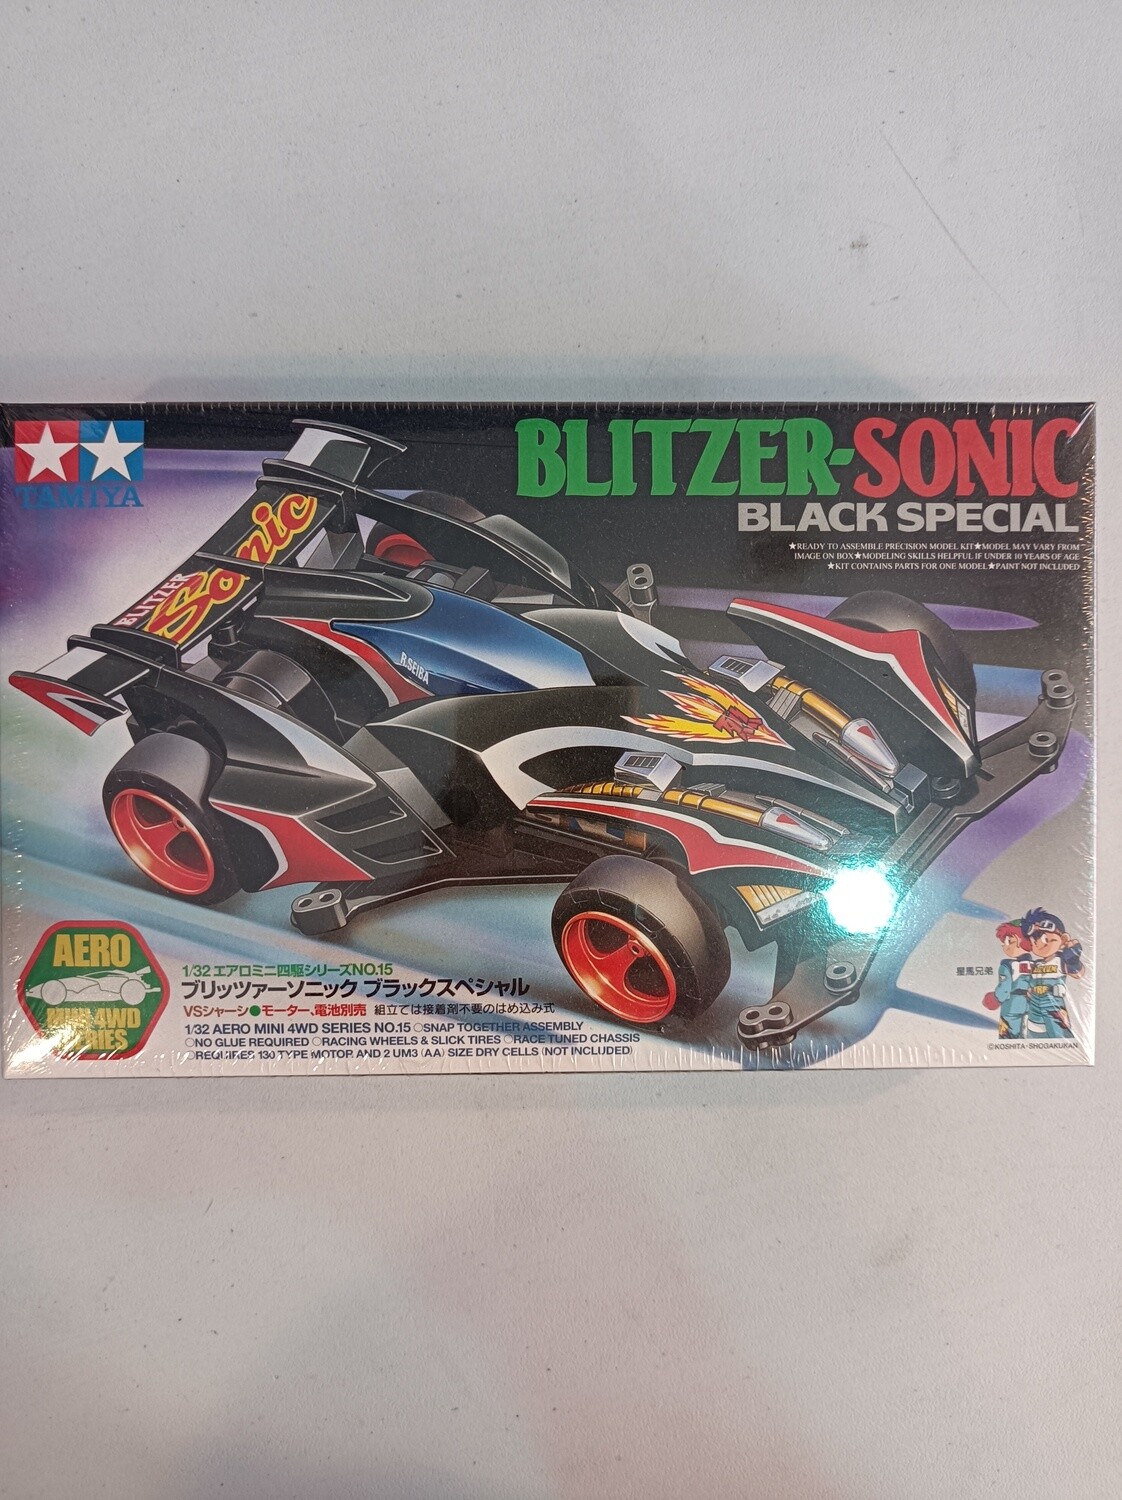 Blitzer-Sonic Black Special 19615